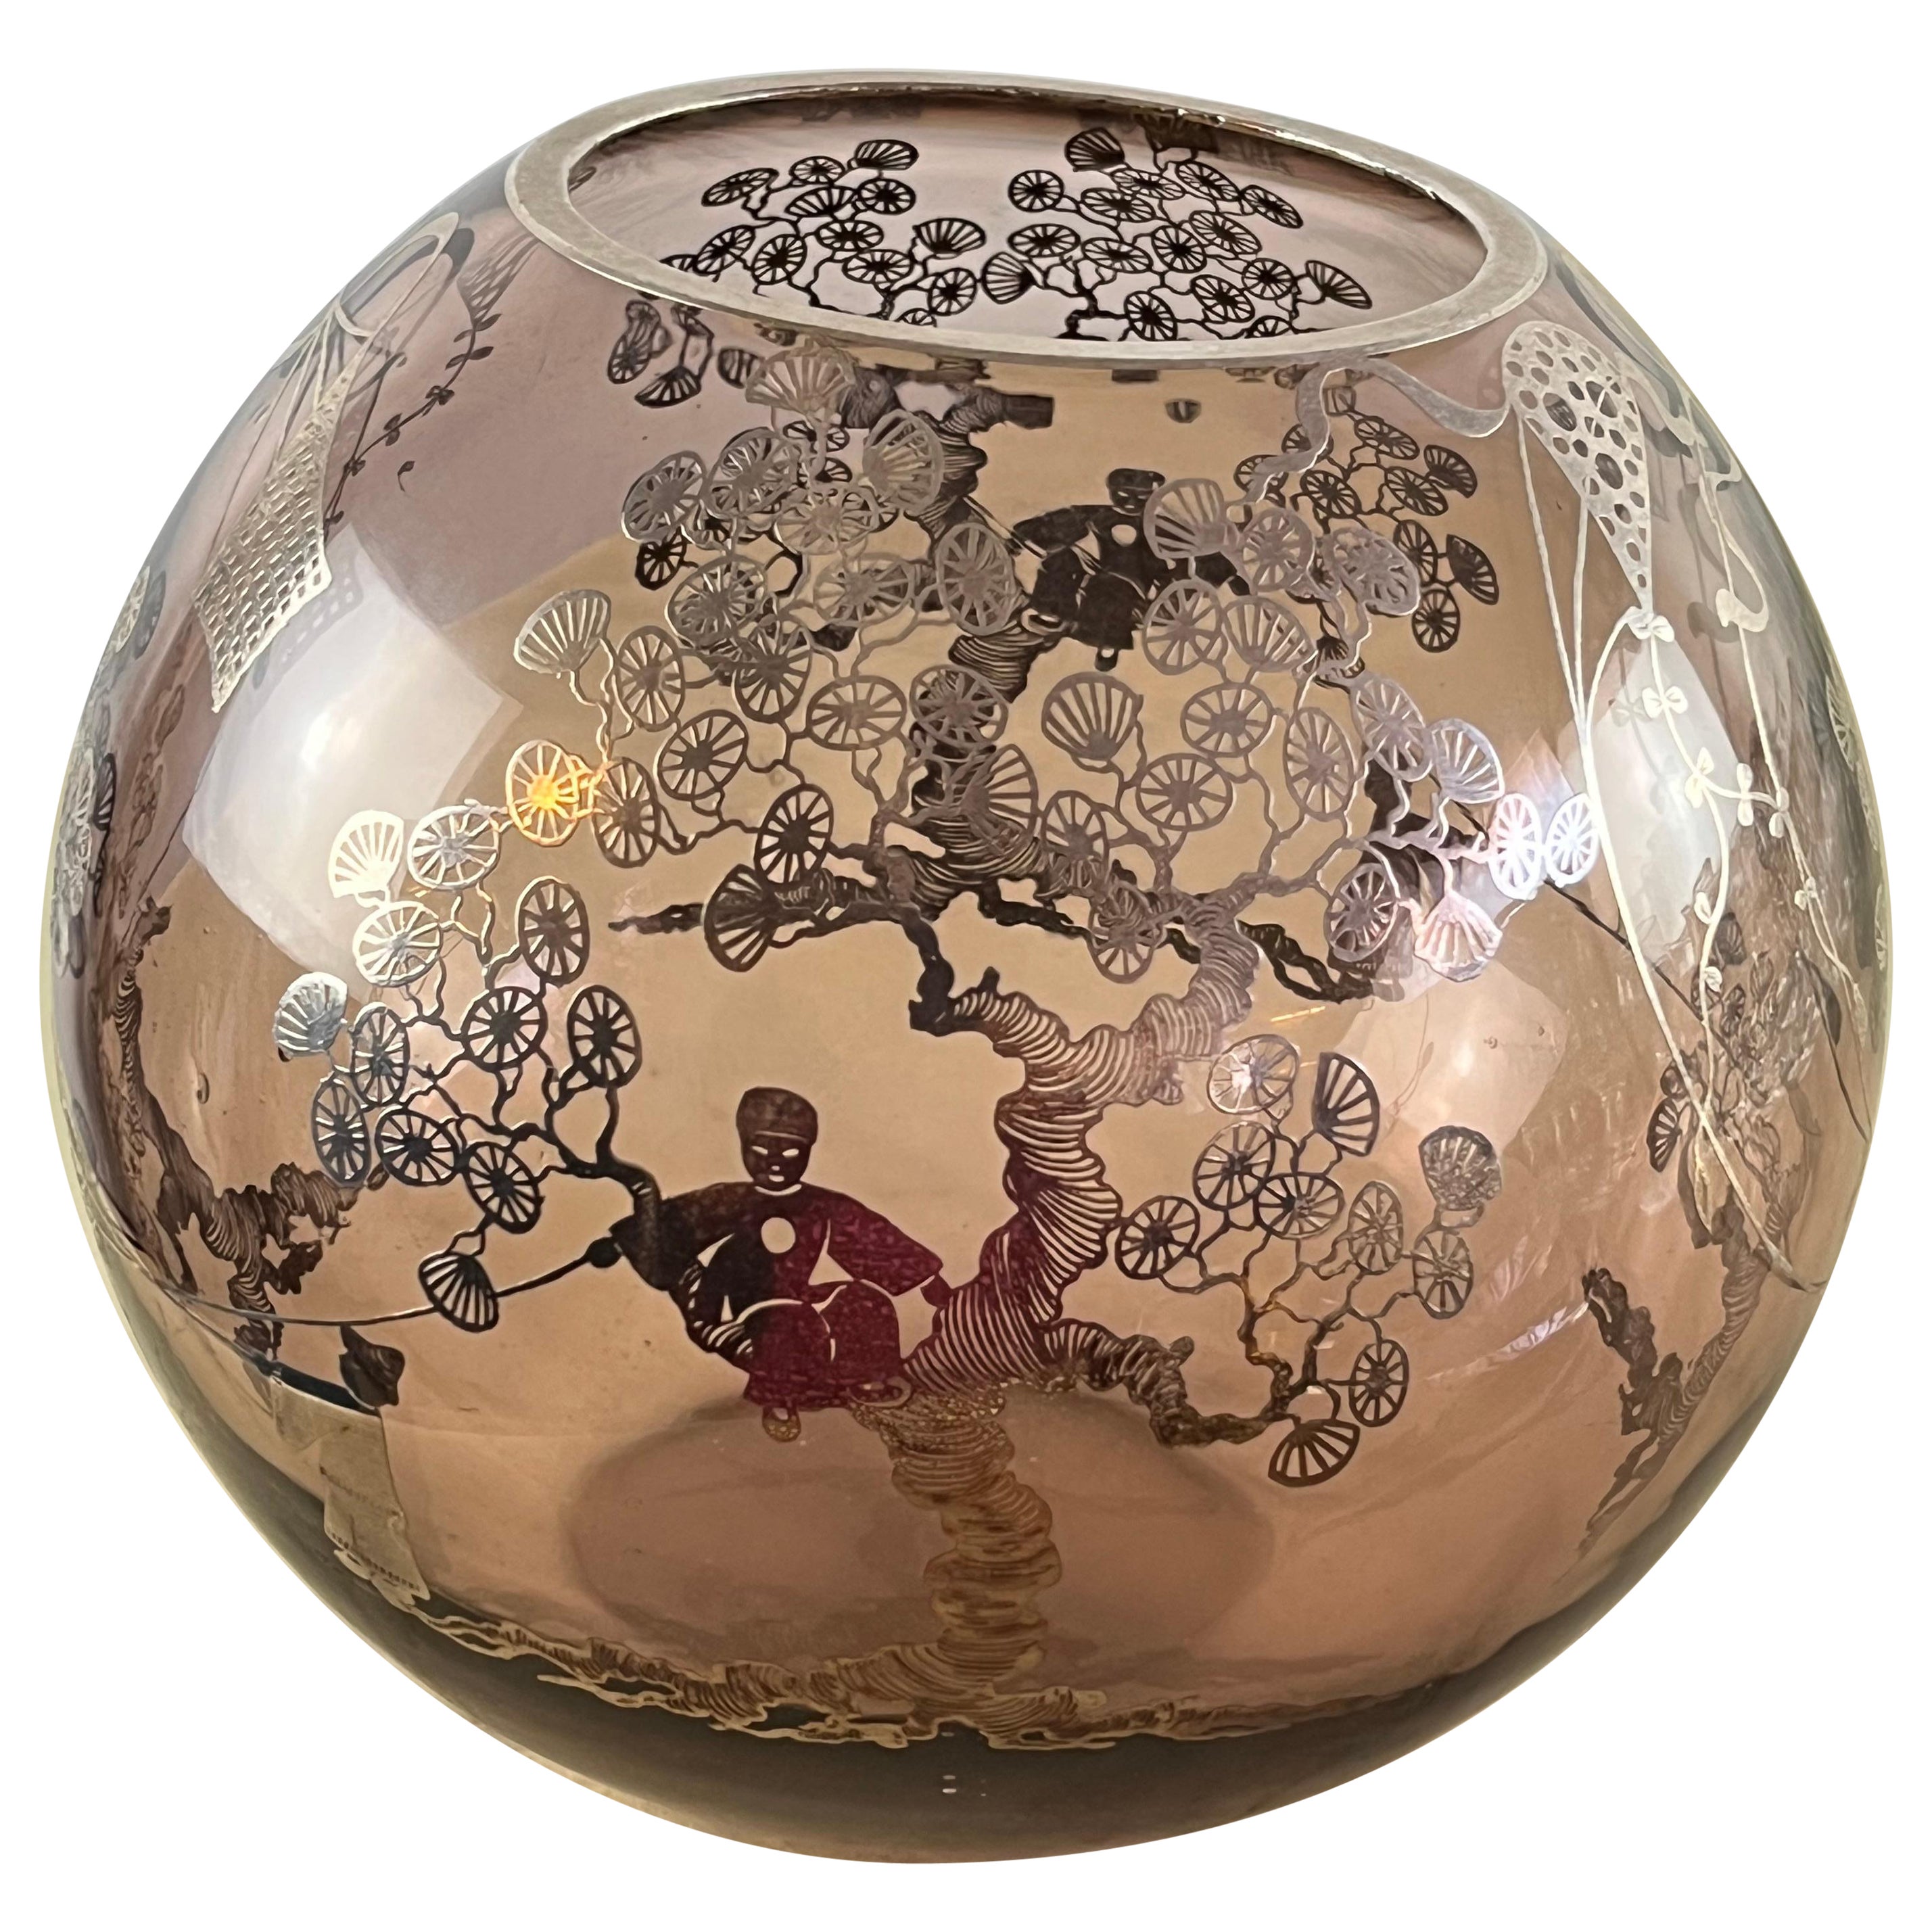 Oriental Glass Bowl Vase  1950s